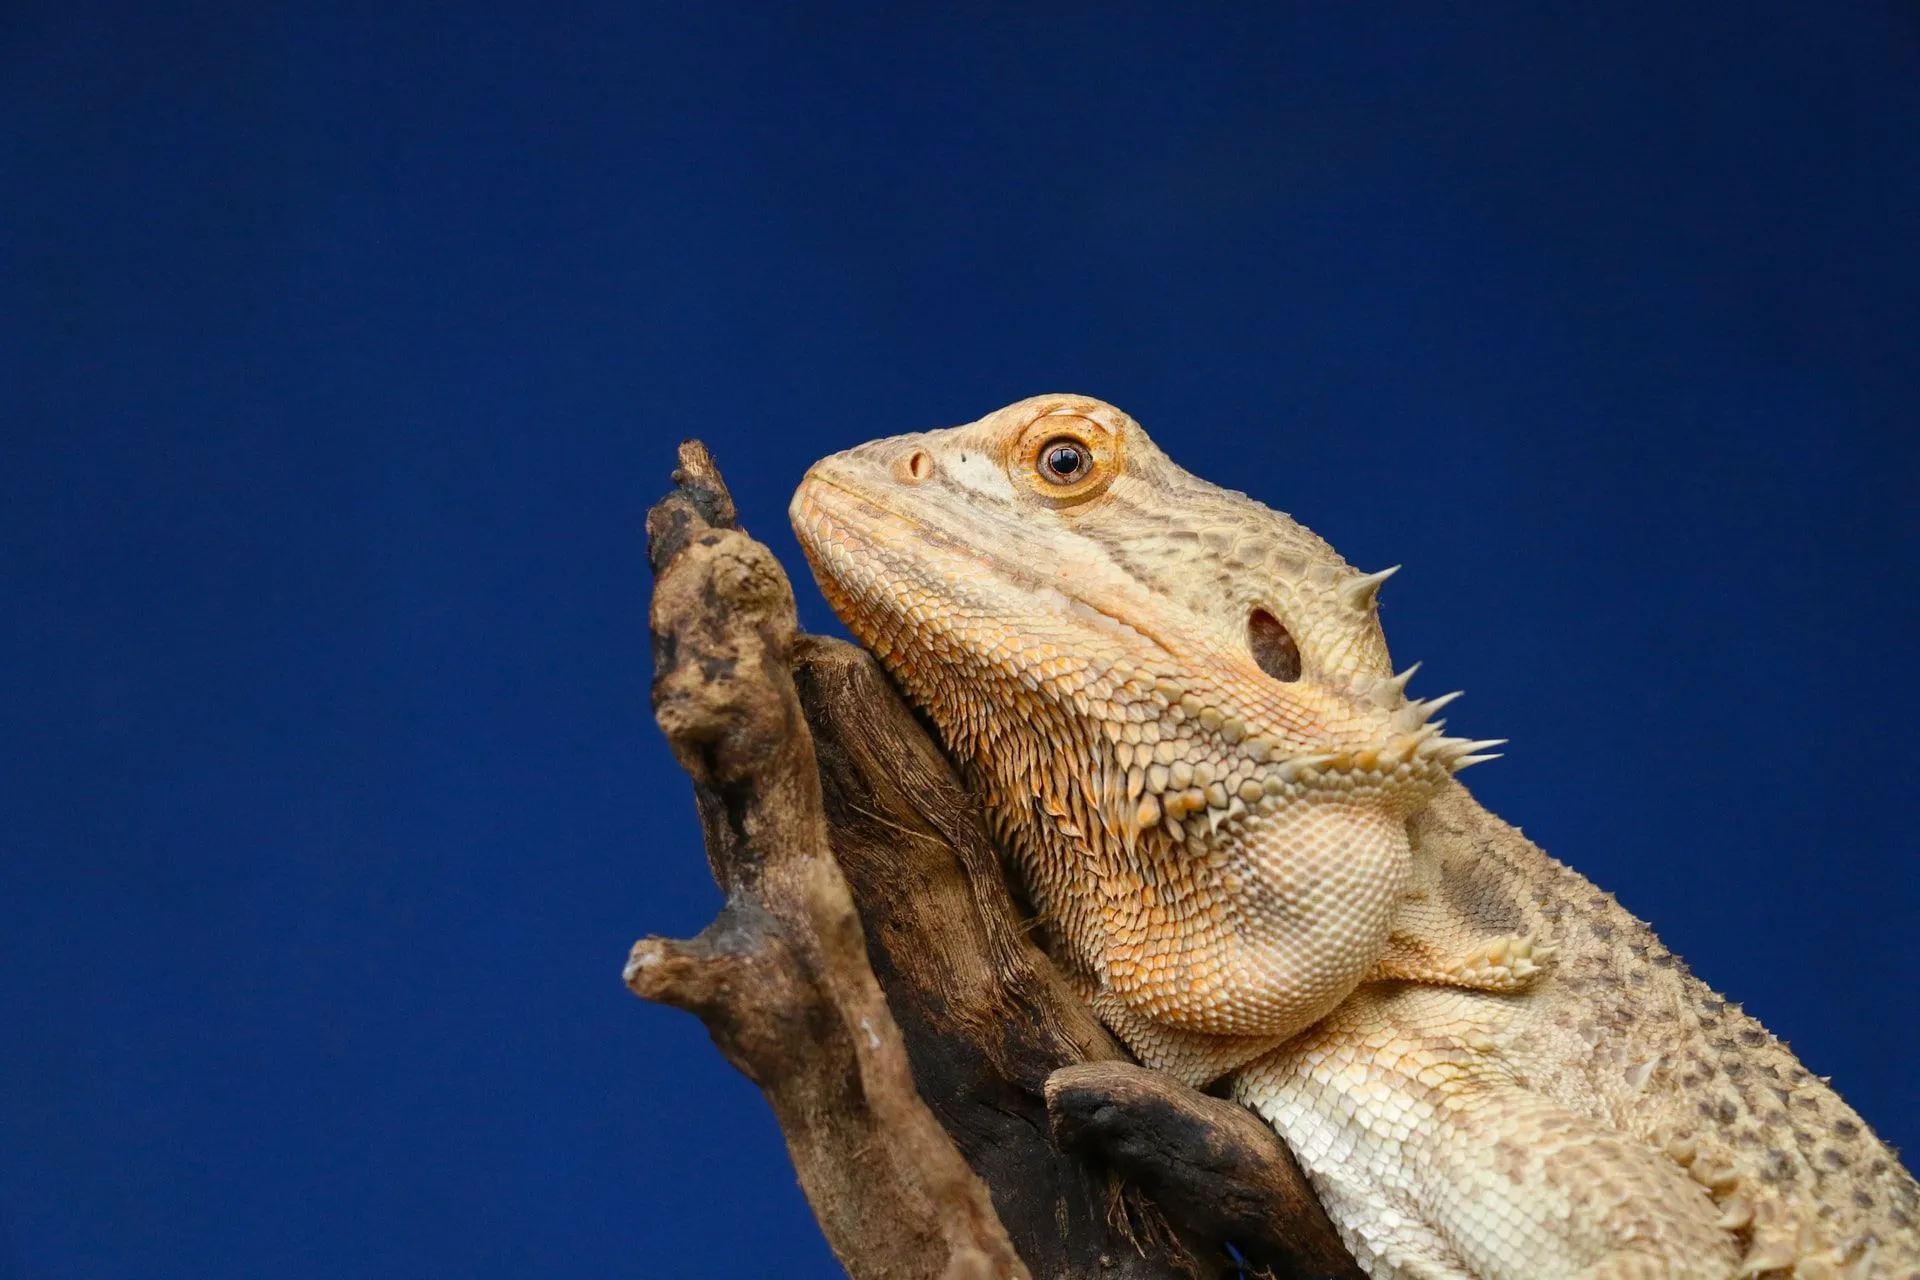 A bearded dragon lizard resting on a branch